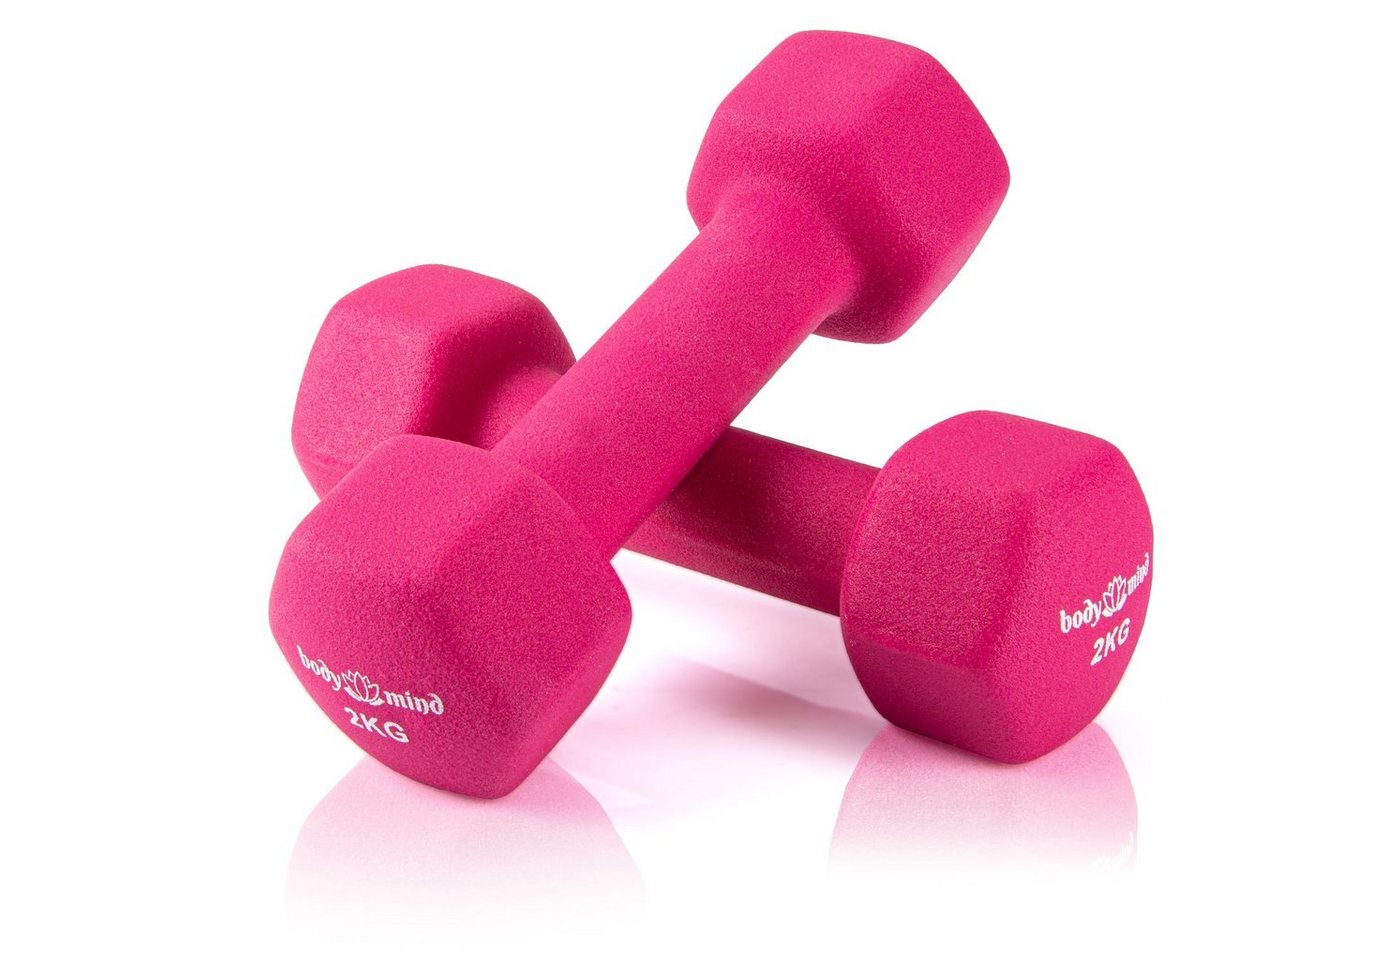 Body & Mind Hantel-Set Gymnastikhanteln Kurzhanteln, (Dumbbells, Effektives Krafttraining), Fitness Workout für Zuhause von Body & Mind